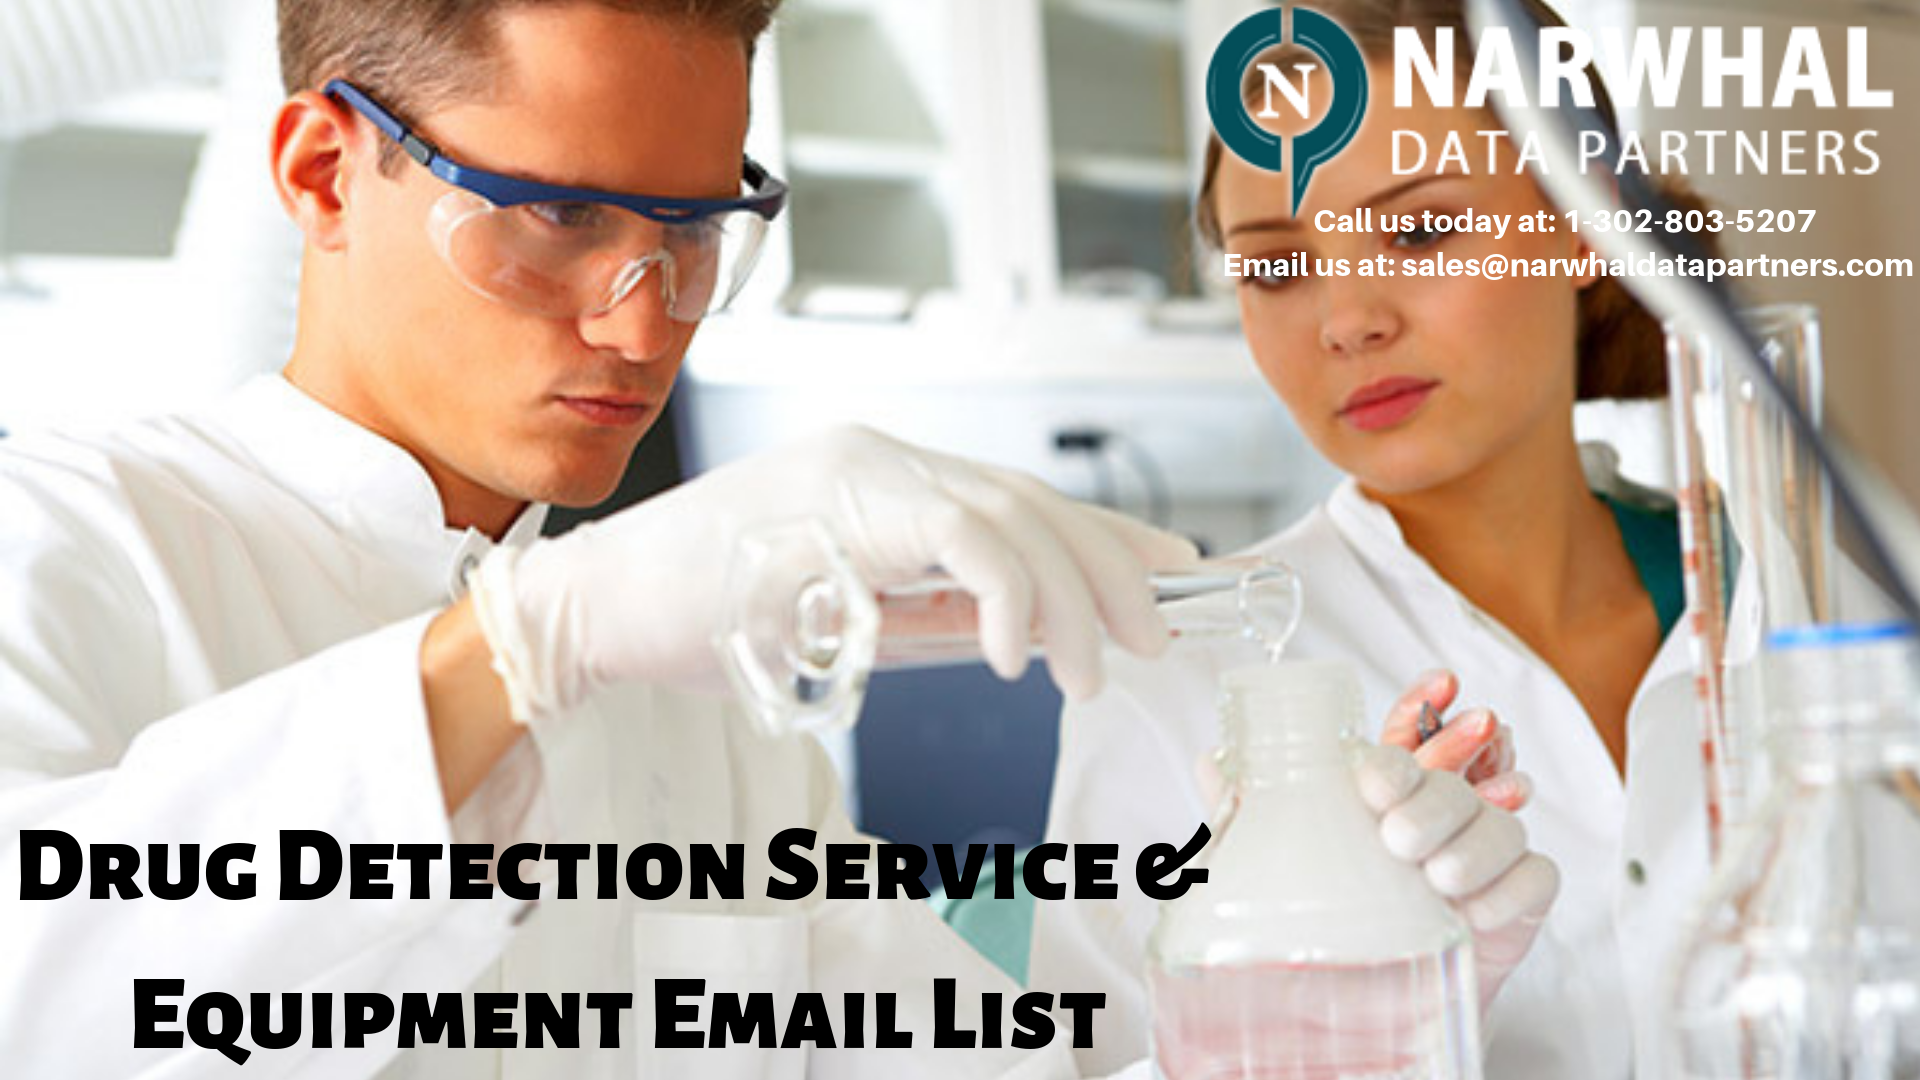 http://narwhaldatapartners.com/drug-detection-service-and-equipment-email-list.html